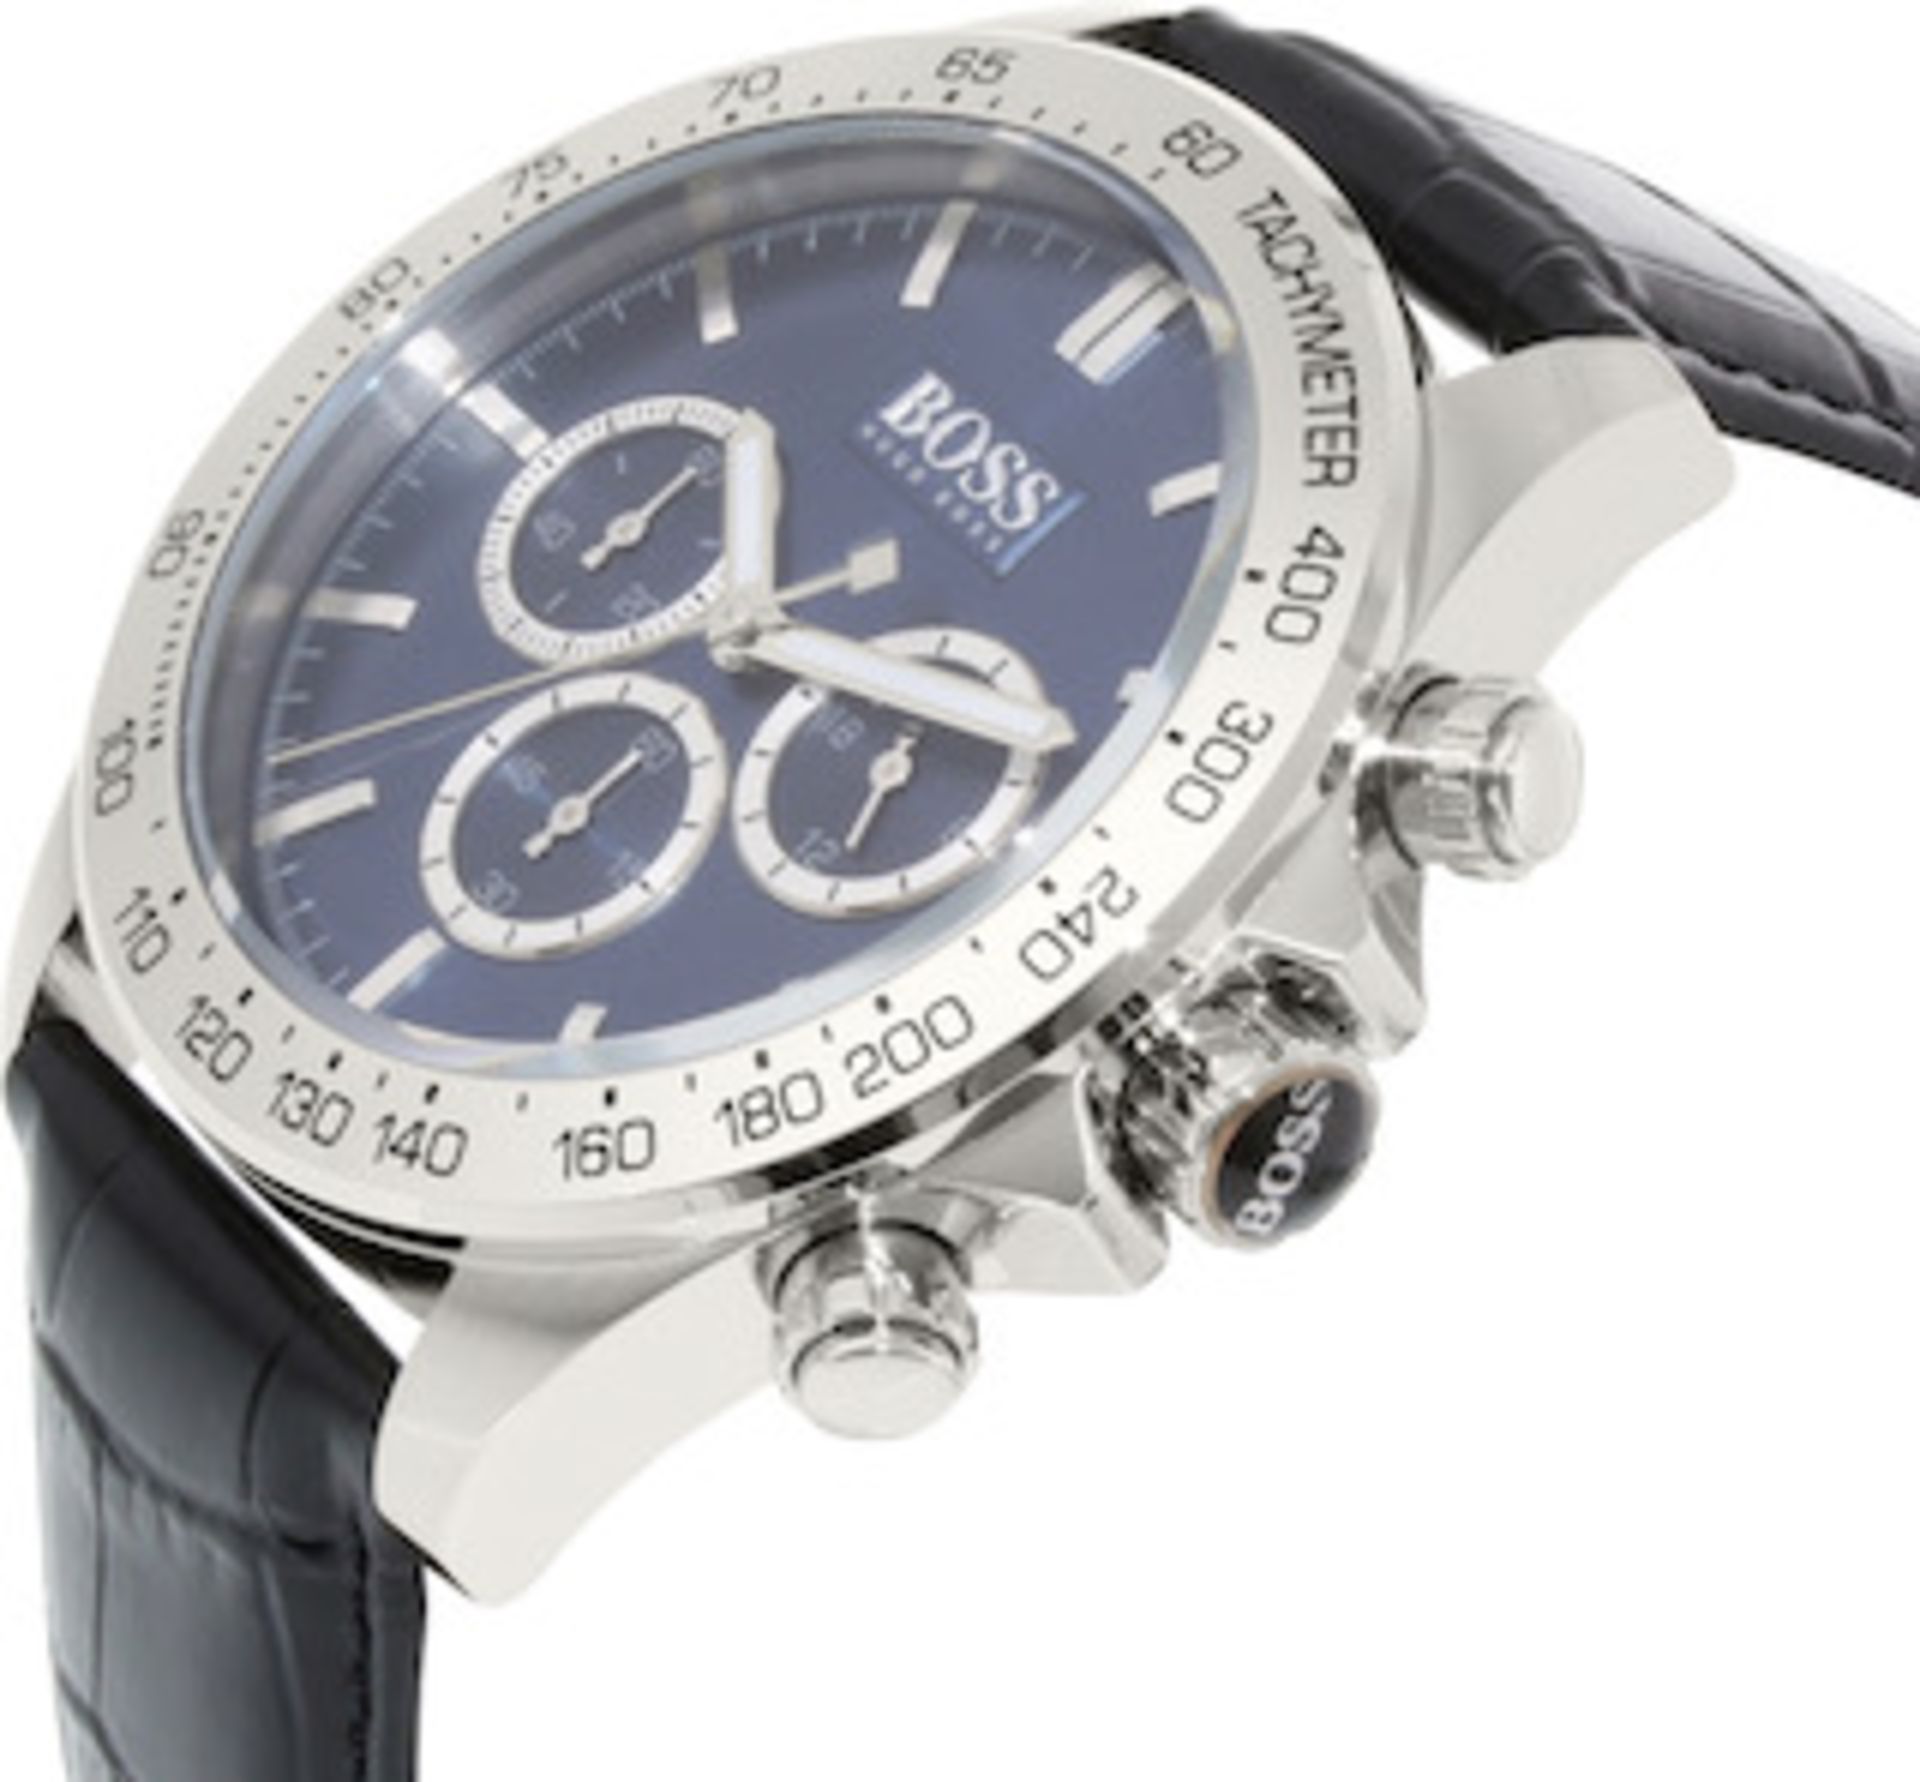 Hugo Boss 1513176 Men's Ikon Blue Dial Black Leather Strap Chronograph Watch - Image 5 of 6